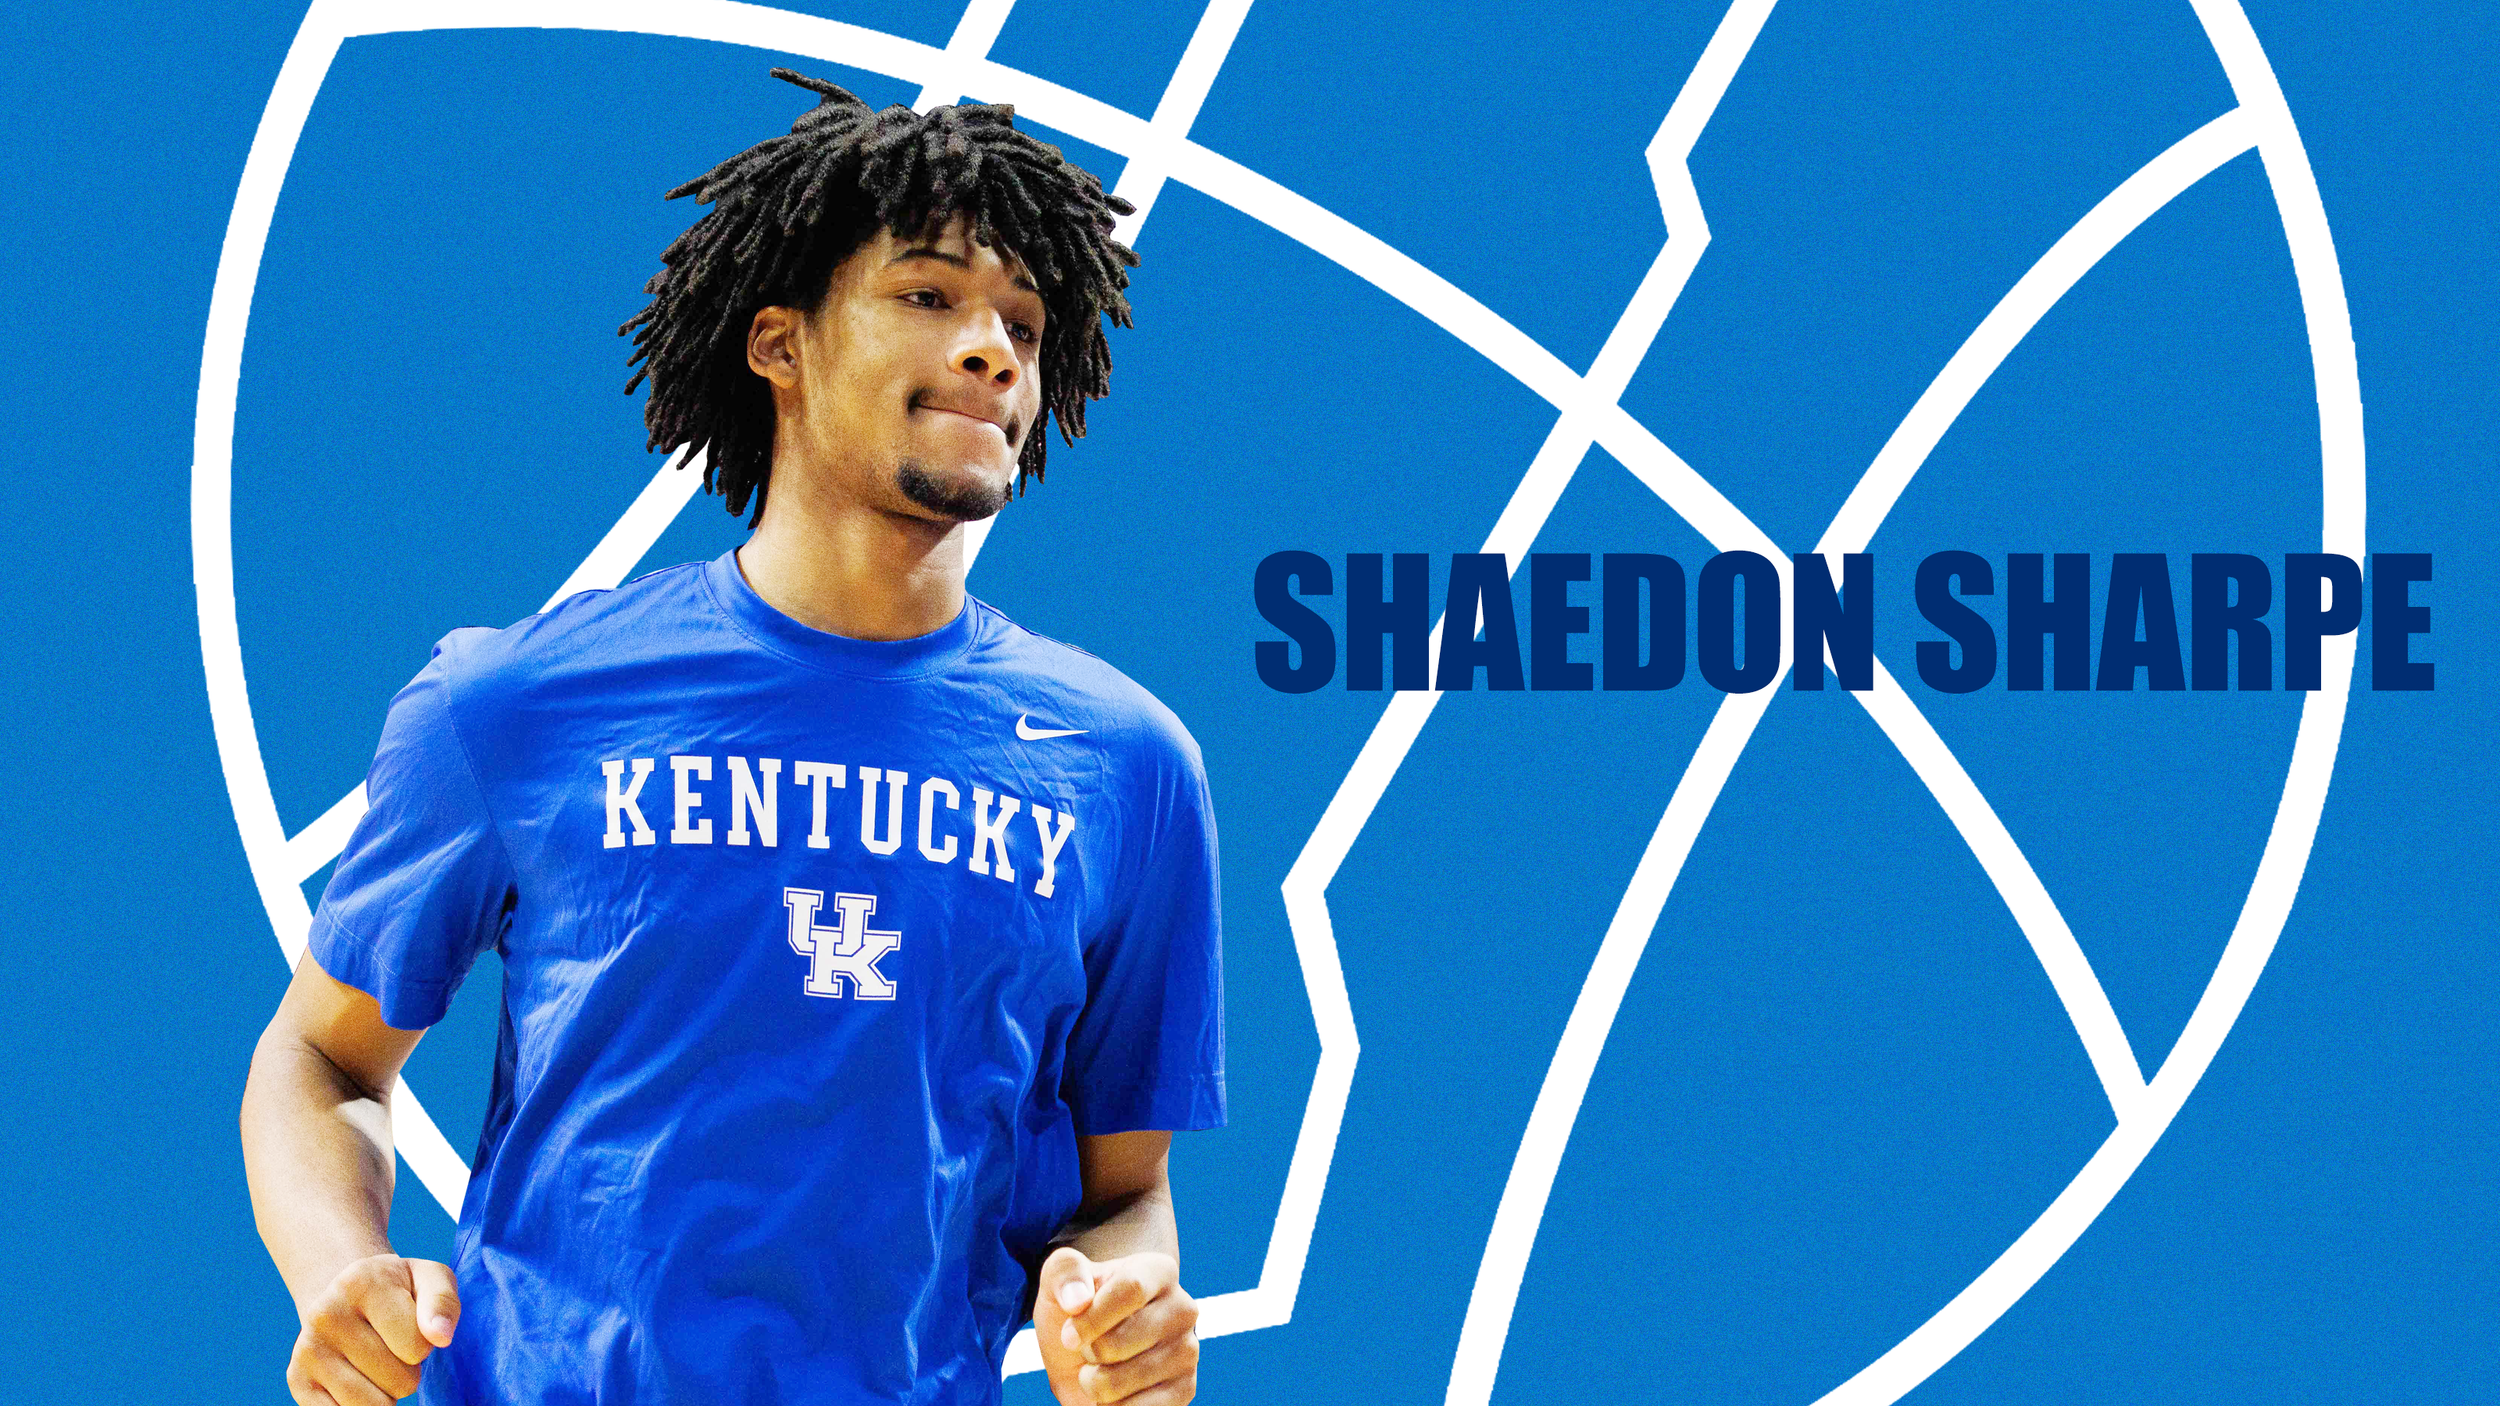 Shaedon Sharpe will not play for Kentucky this season